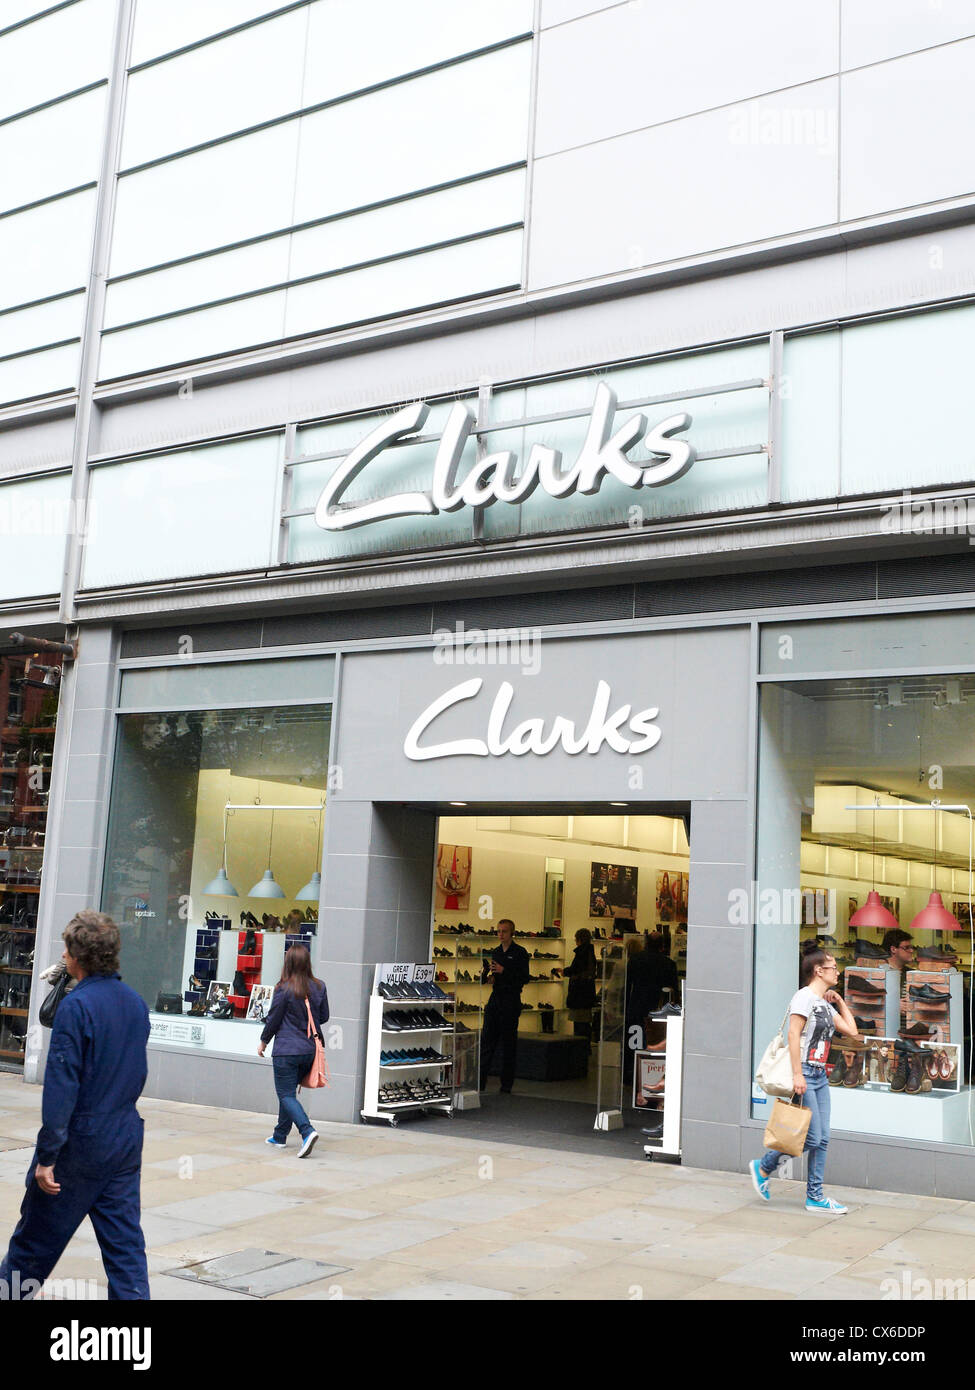 Clarks shop on Market Street UK Stock - Alamy